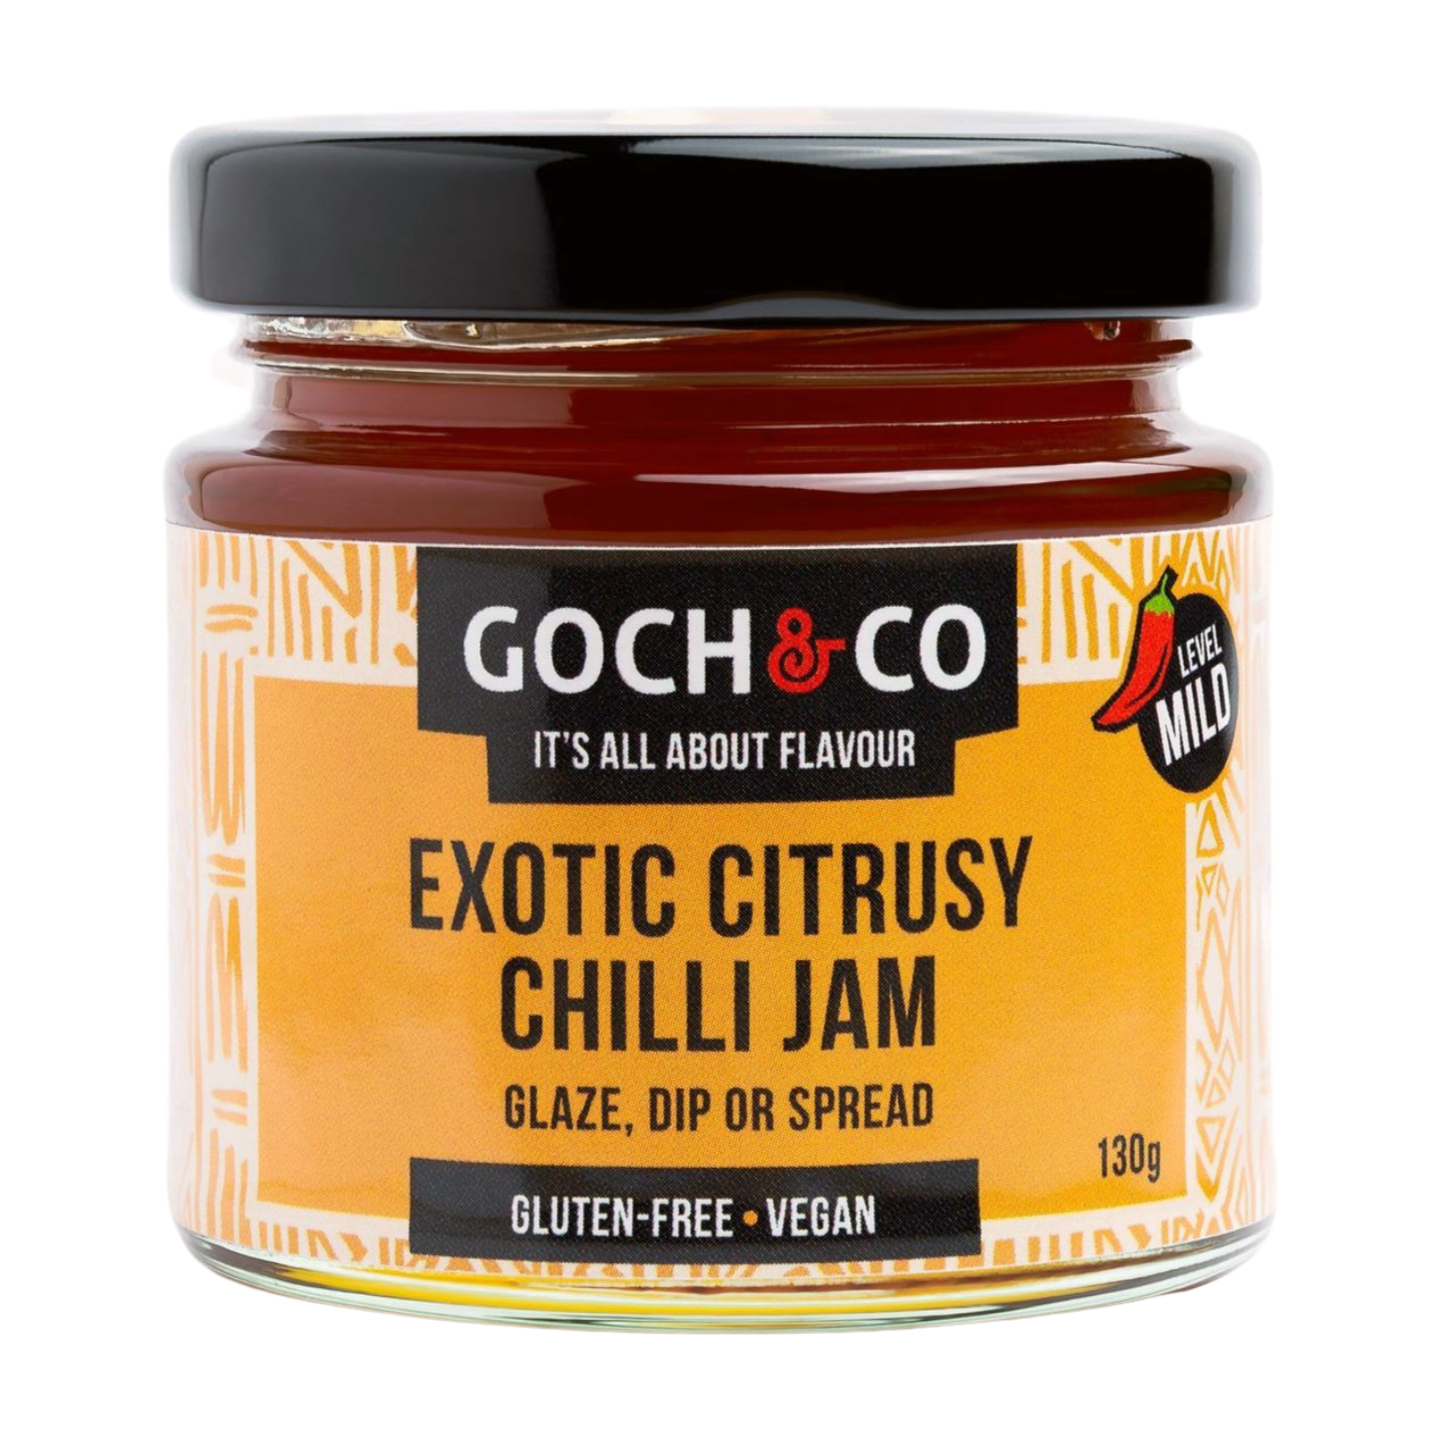 Goch & Co Exotic Citrusy Chilli Jam (6x130g)